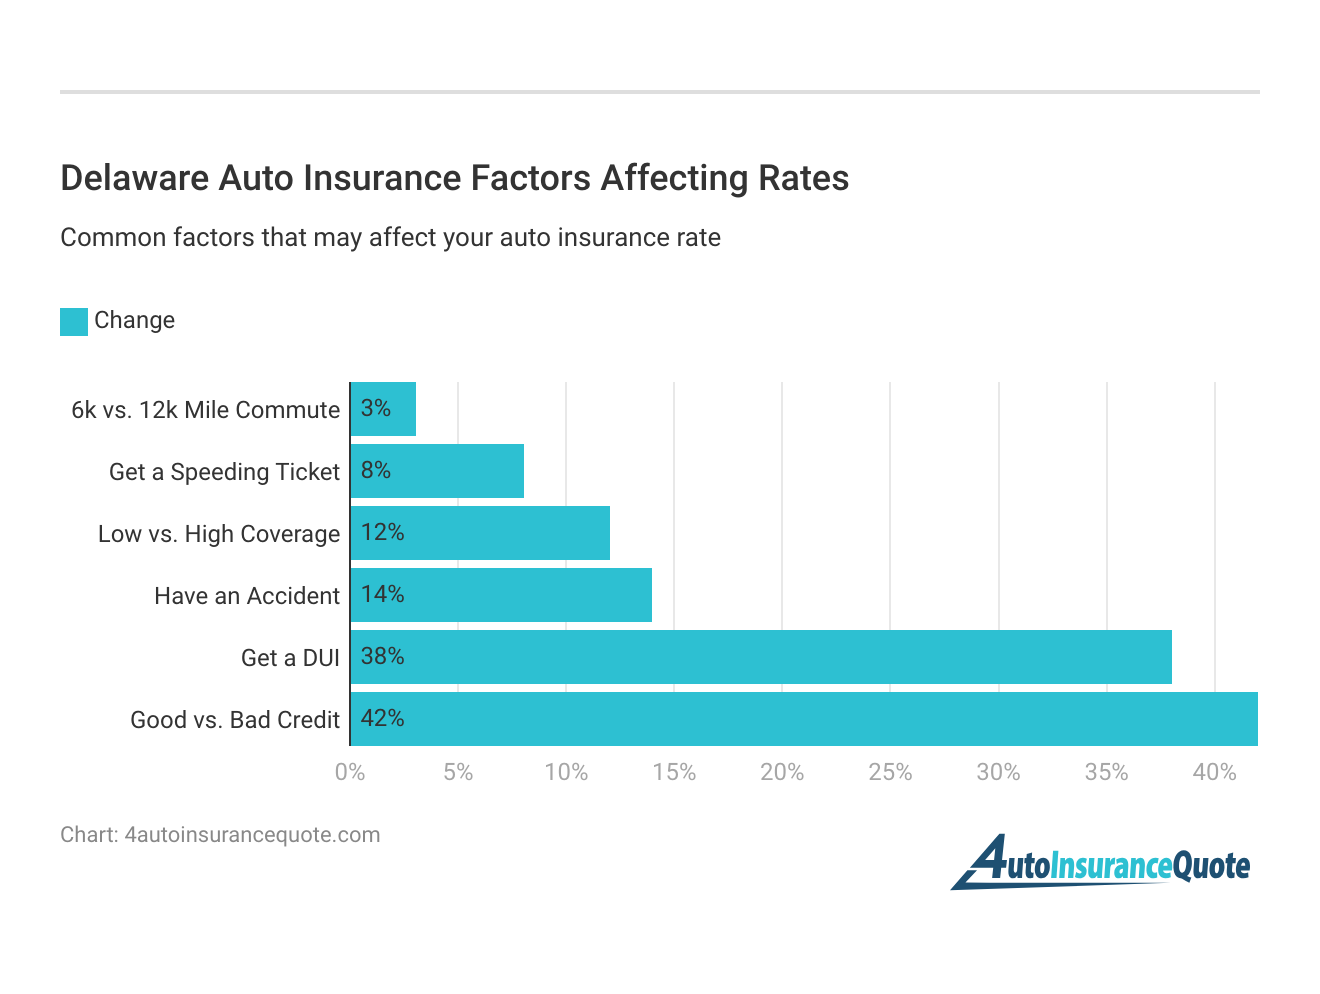 <h3>Delaware Auto Insurance Factors Affecting Rates</h3>